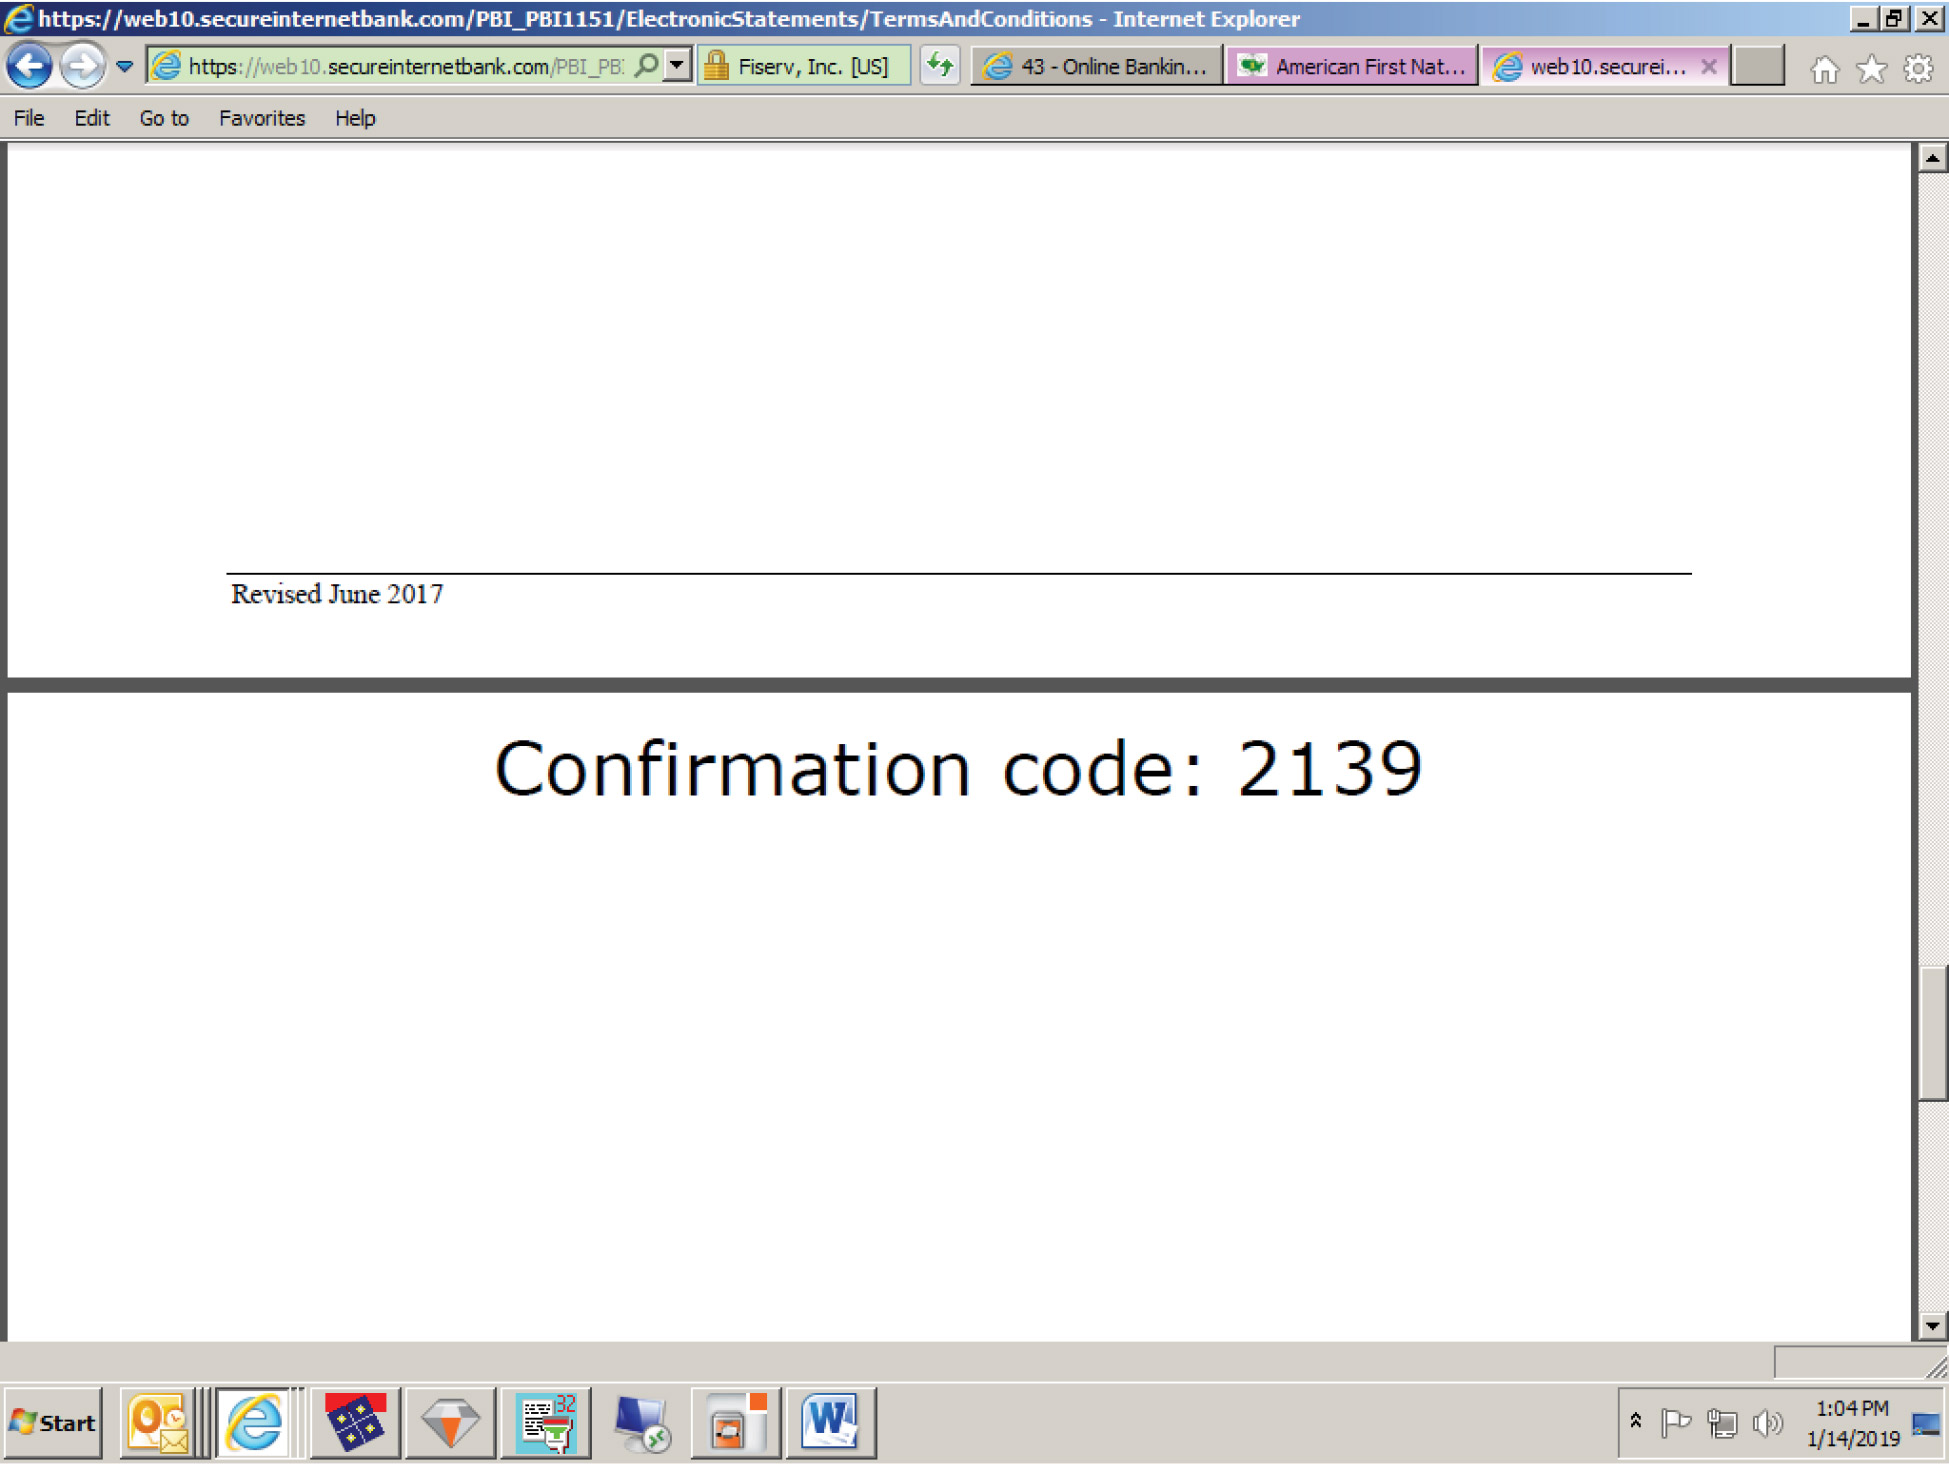 Screencap of e-statement confirmation code